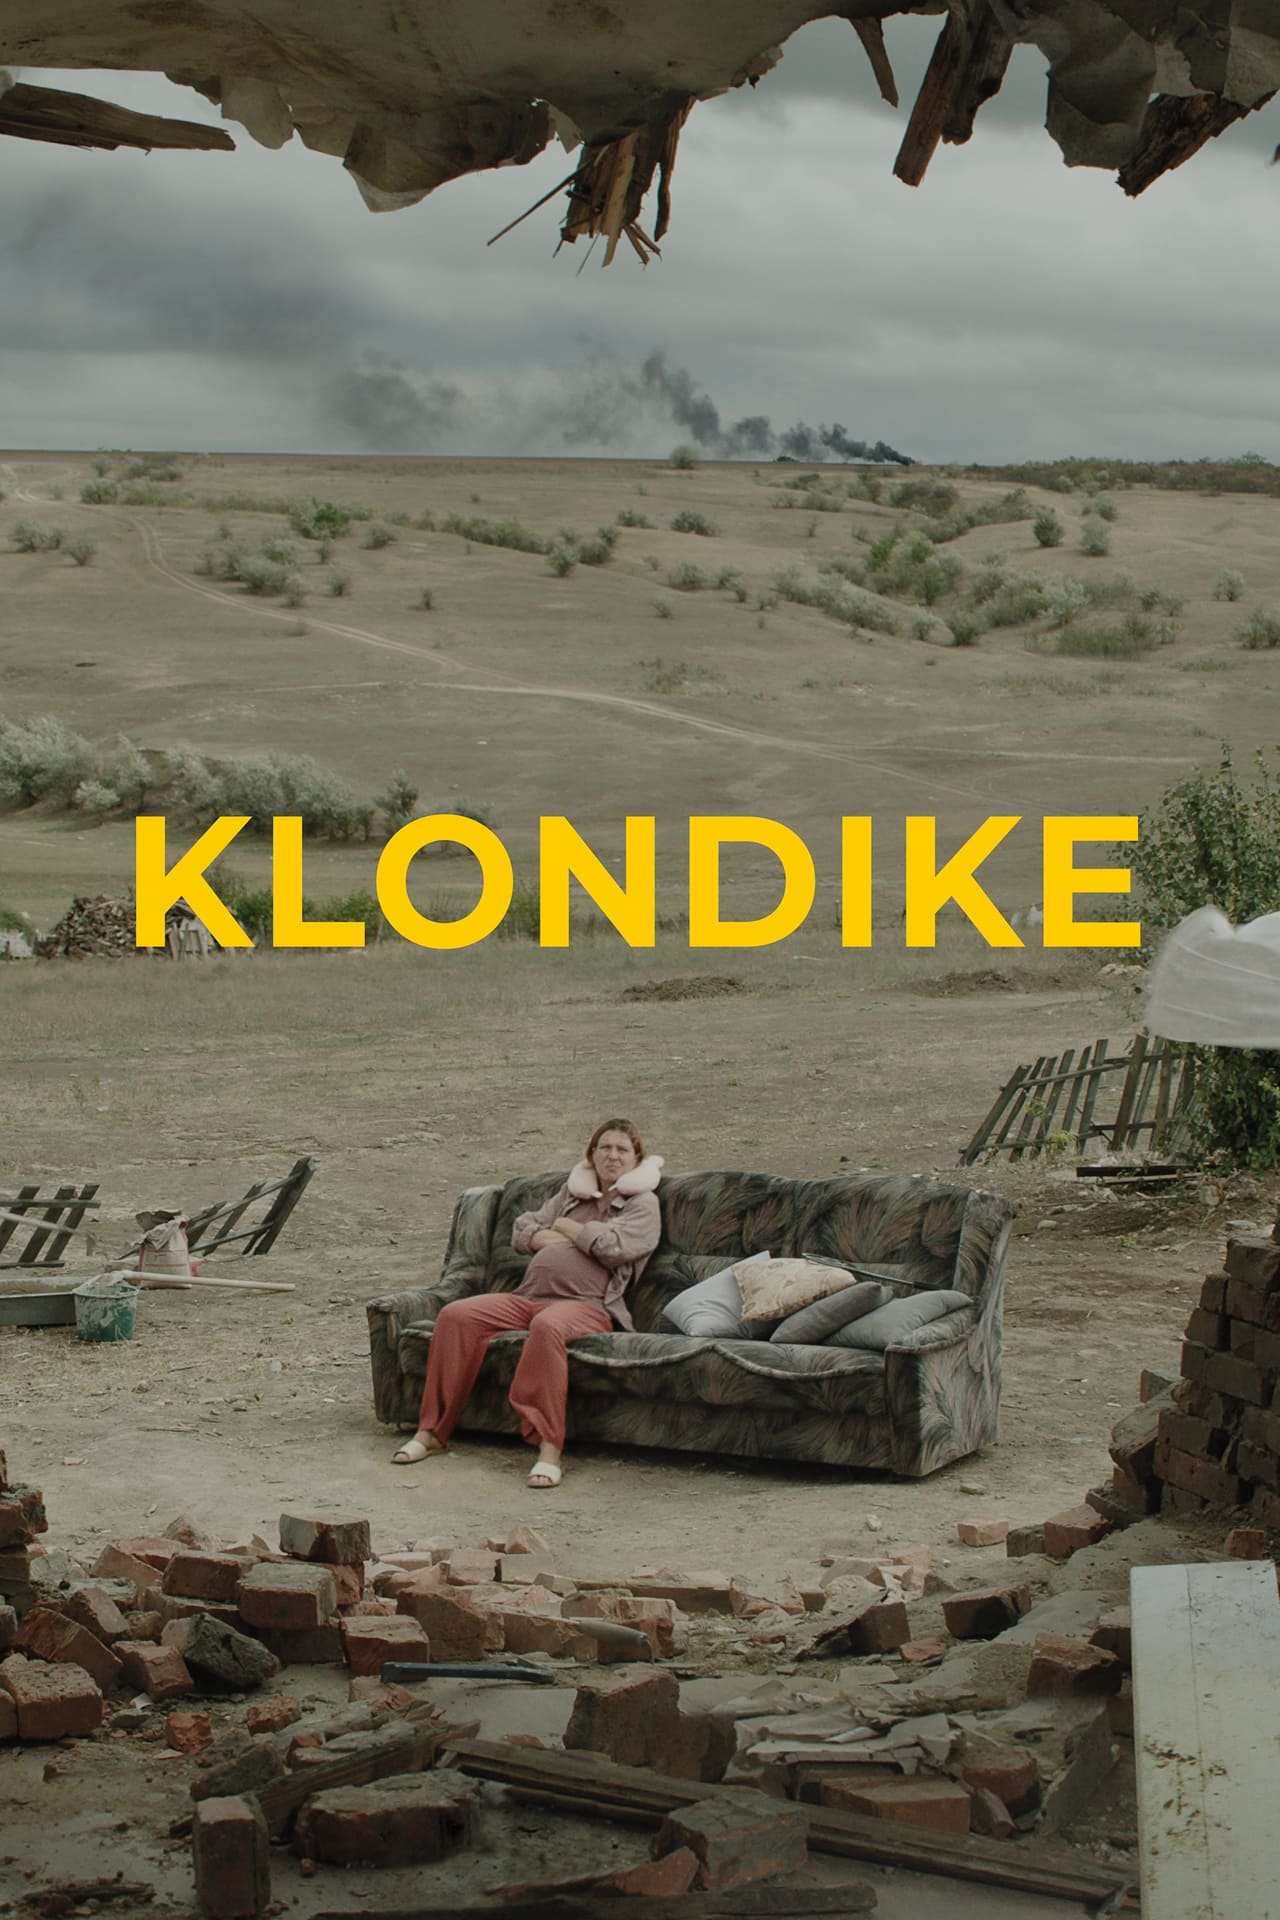 Plakát pro film “Klondike”